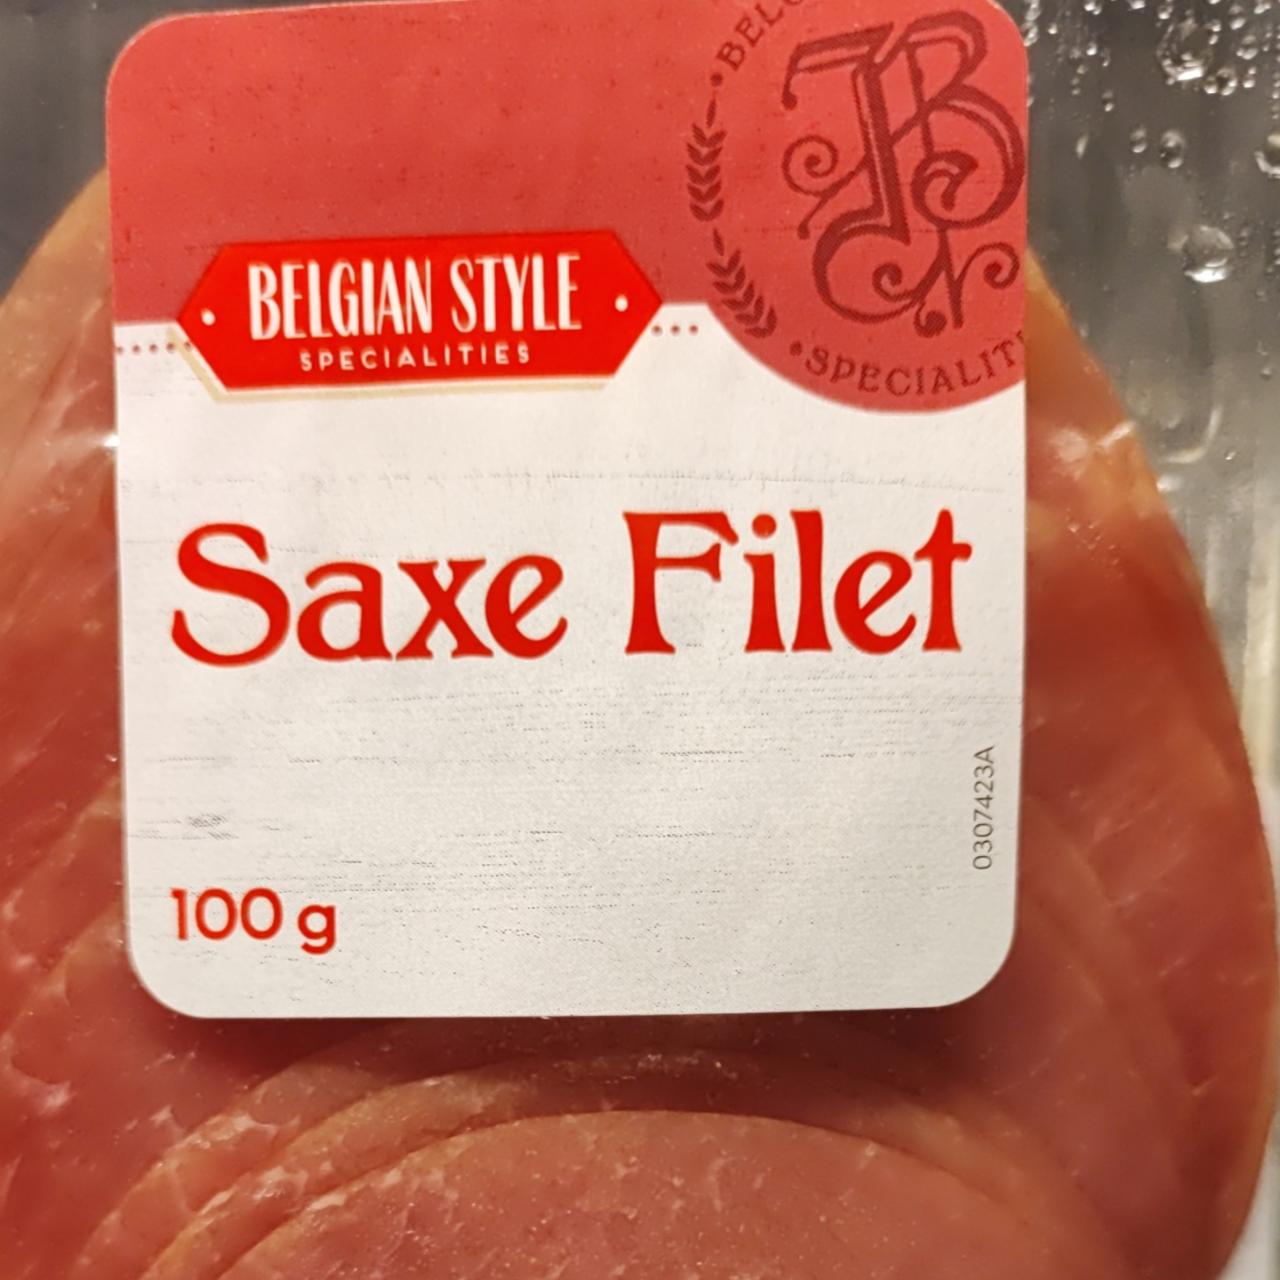 Fotografie - Saxe Filet Belgian Style